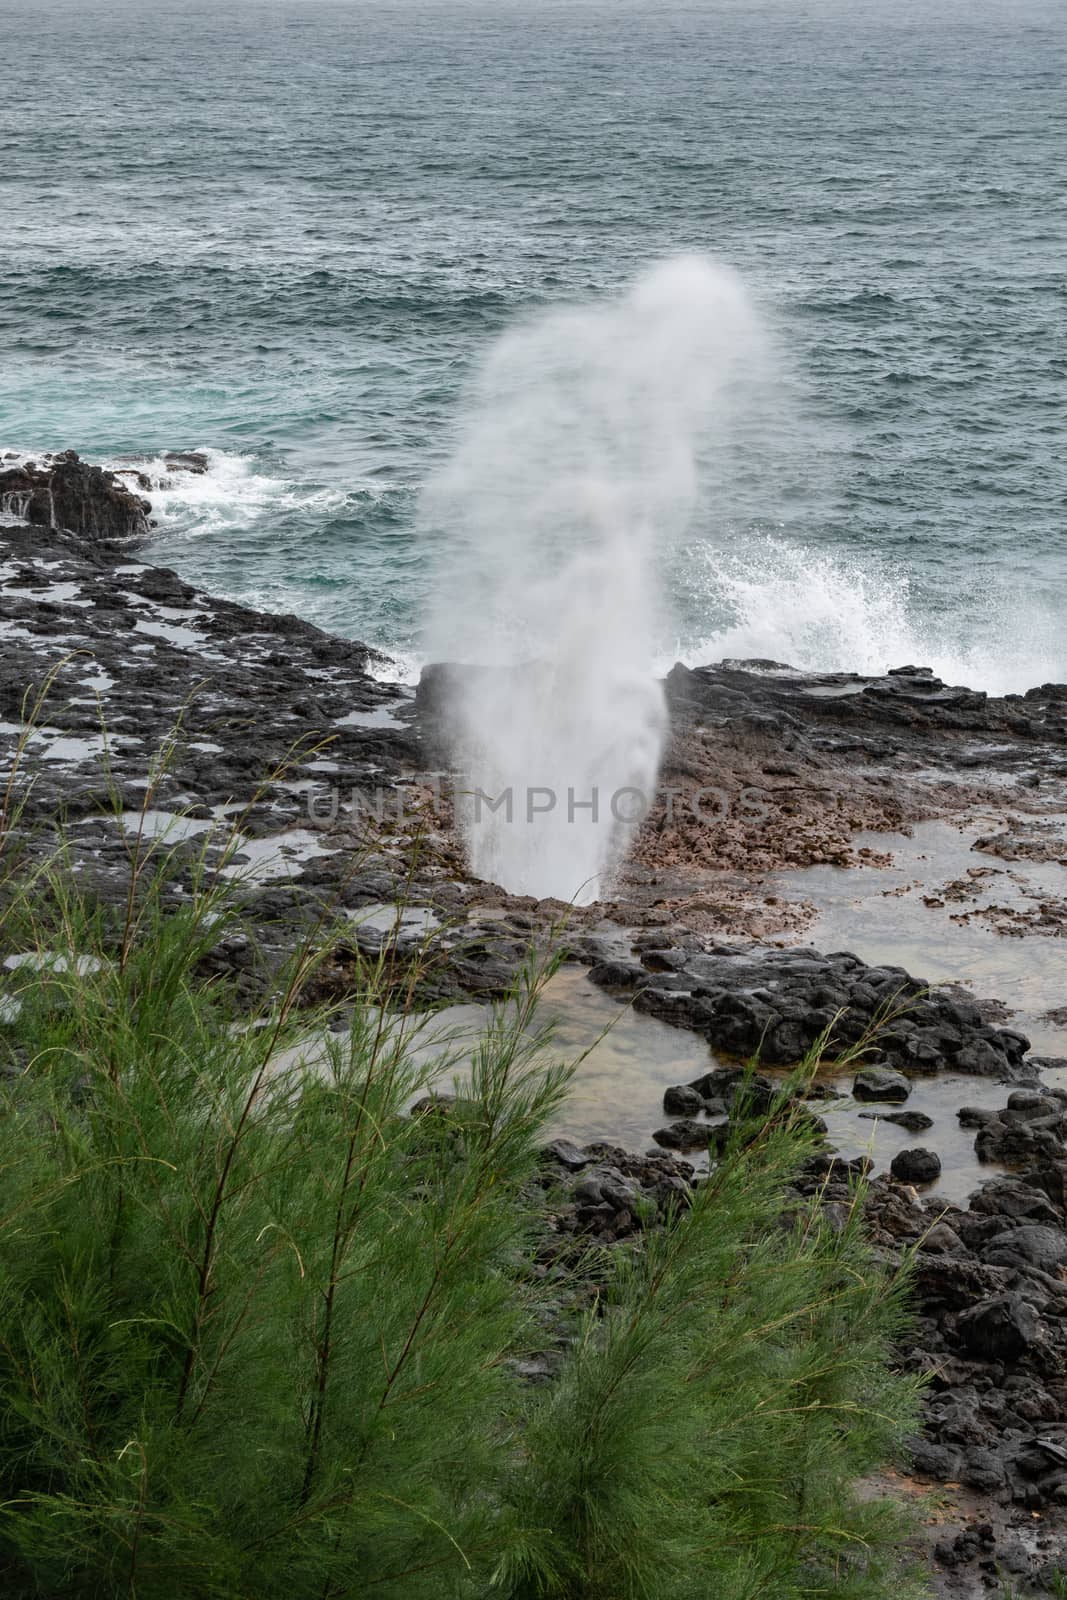 Koloa, Kauai, Hawaii, USA. - January 16, 2020: Gray-azure Pacific Ocean with black rocky coastline shows eruption of the Spouting Horn geiser. Some green foliage.